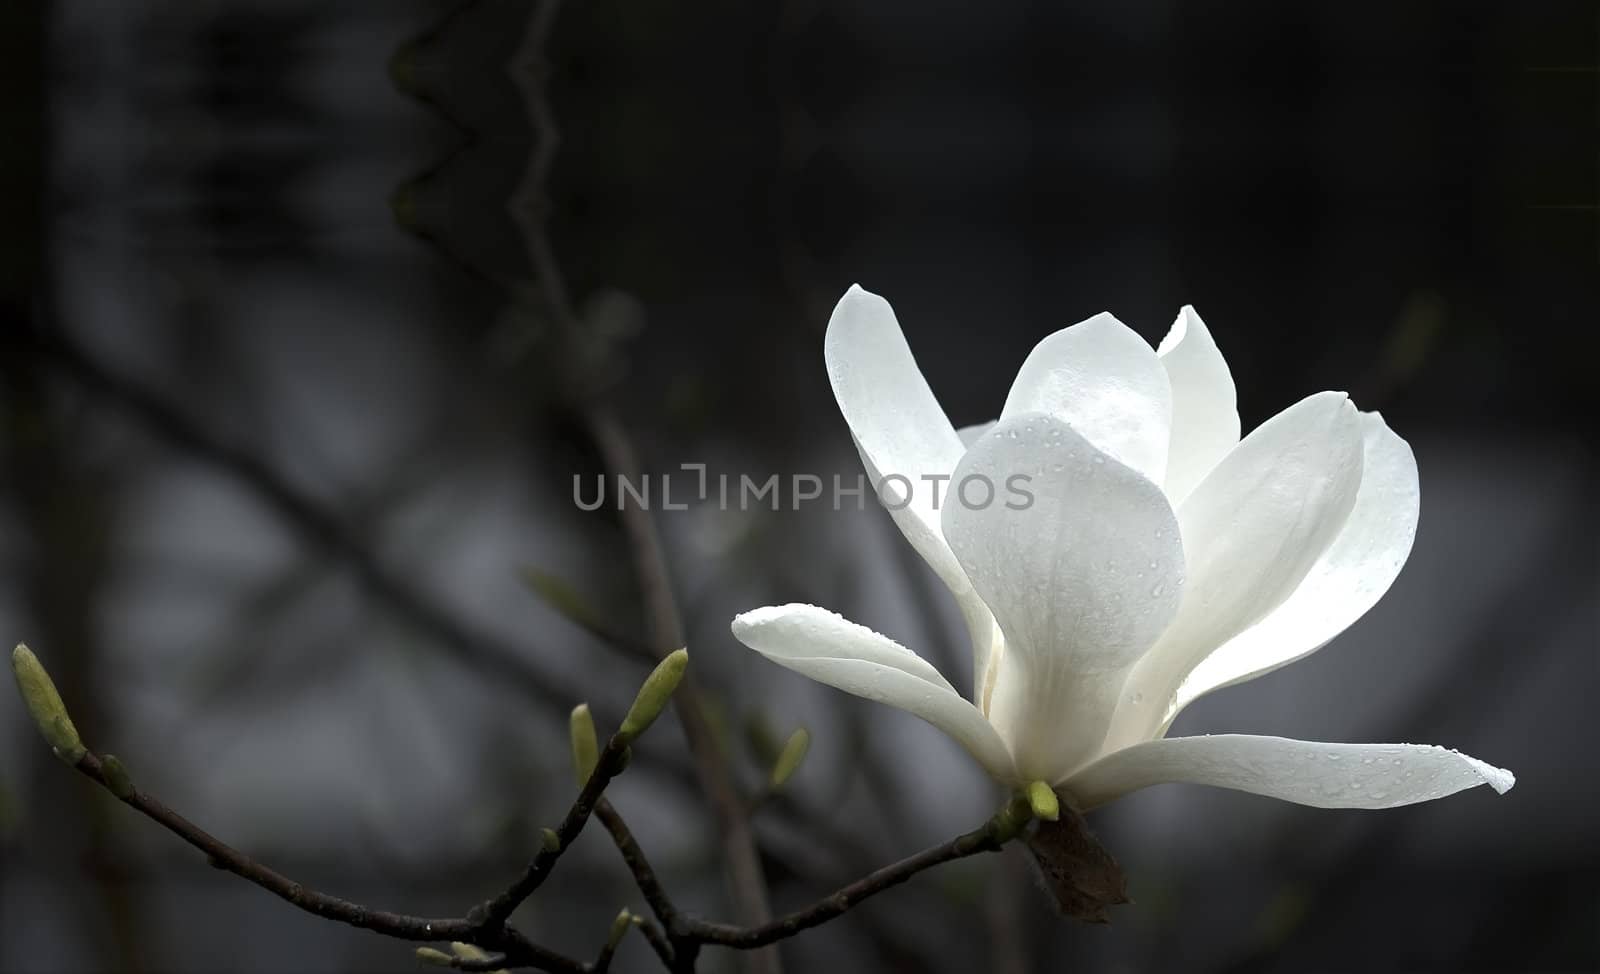 a beautiful white magnolia flower.